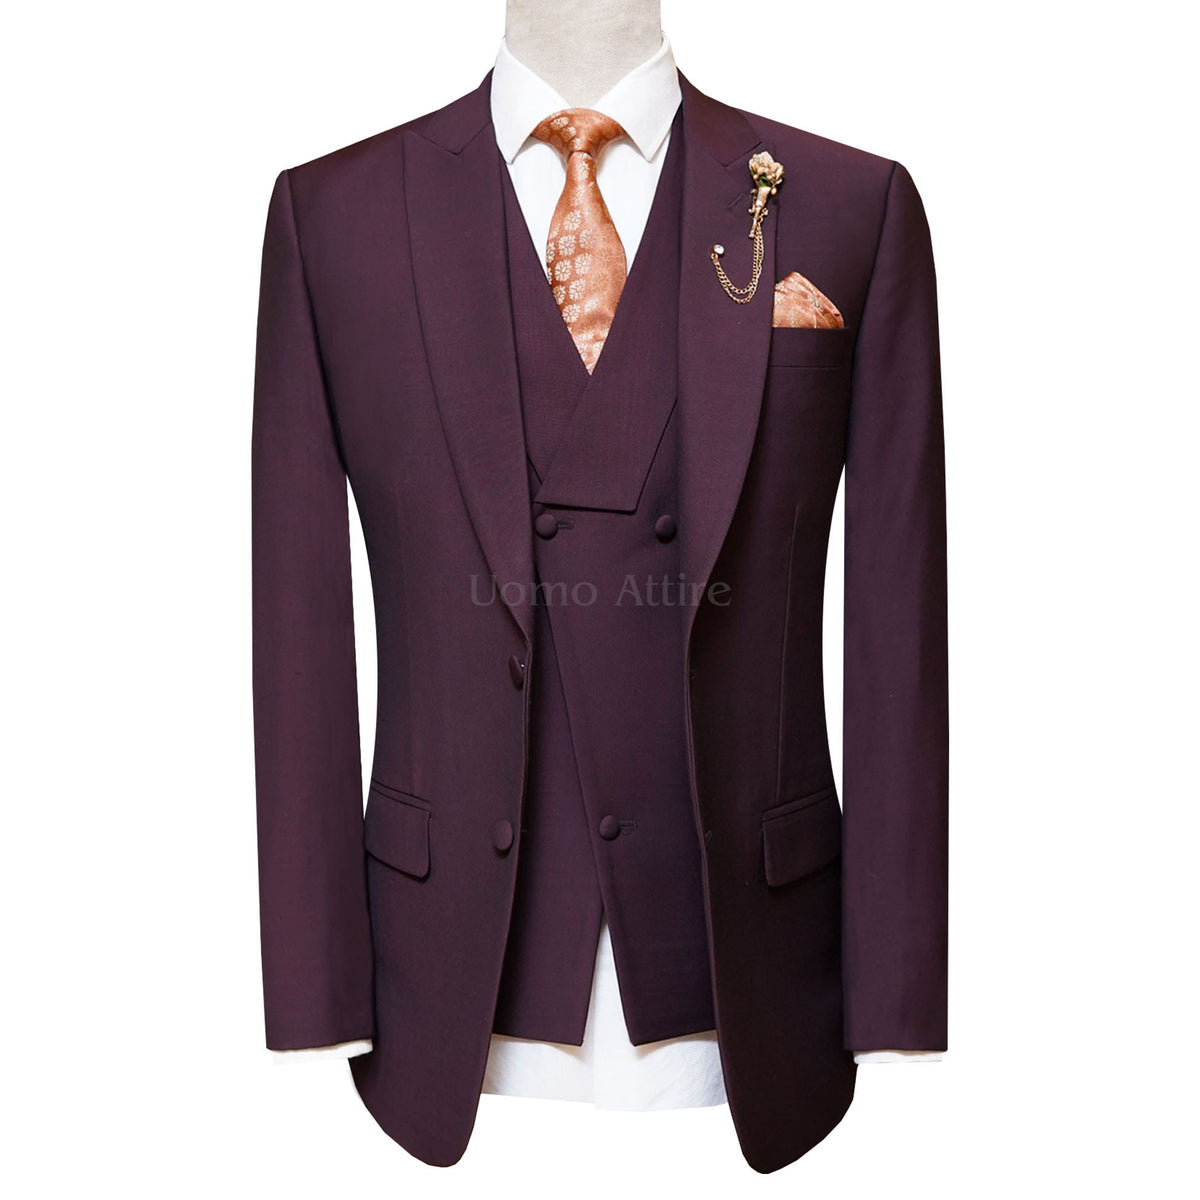 Burgundy Italian tailored fit 3 piece suit for men - Ottavio